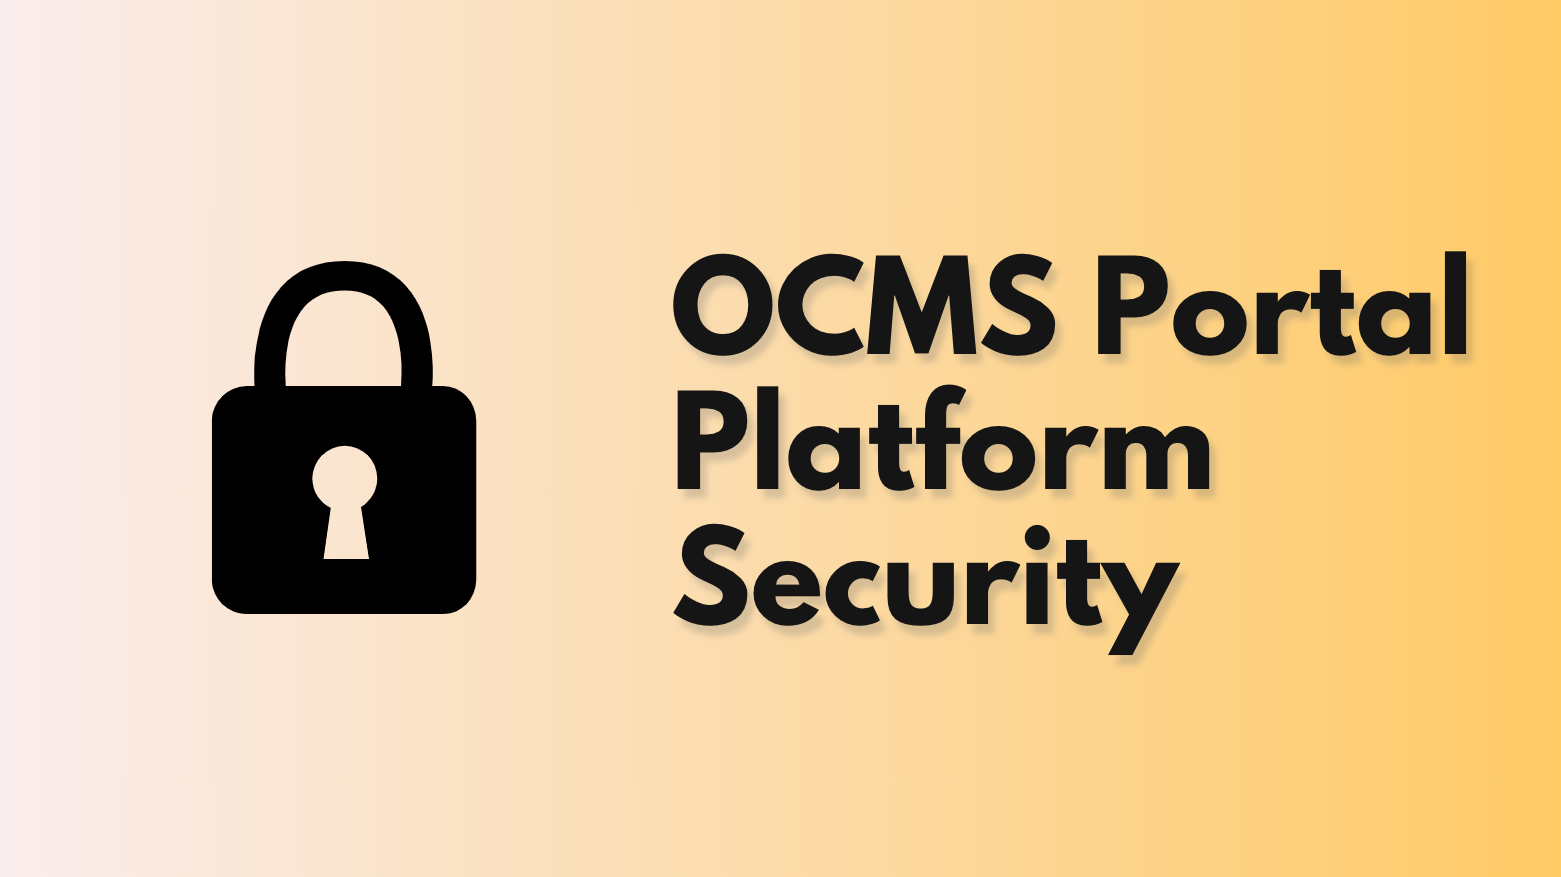 Security Policy OCMS Portal